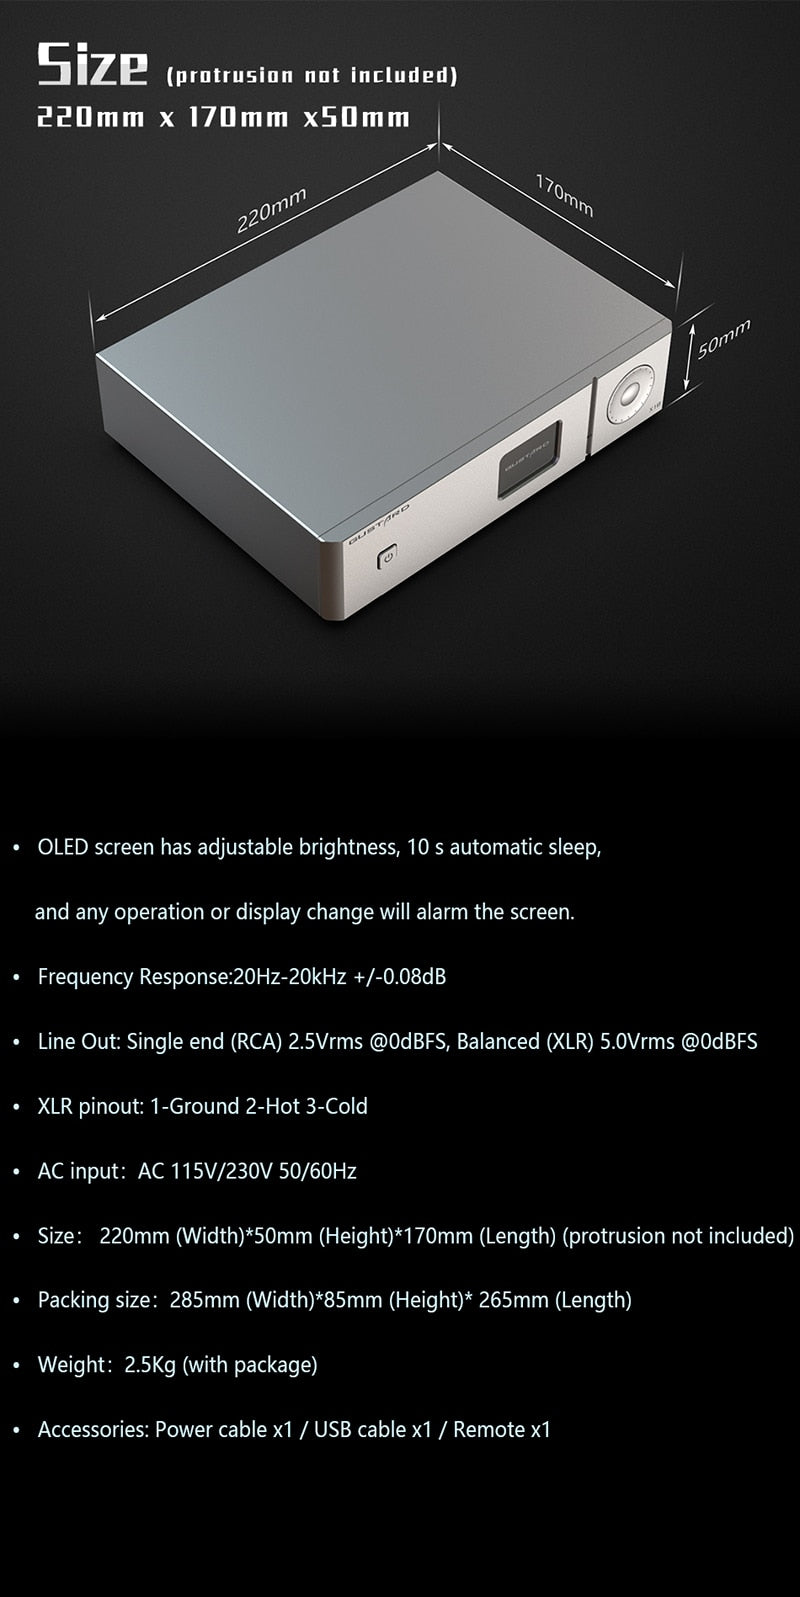 GUSTARD X18 DAC ES9038PRO XMOS XU216 DSD512 PCM768K MQA Bluetooth 5.0 LDAC HD APTX High-Performance Audio Decoder IIS - The HiFi Cat